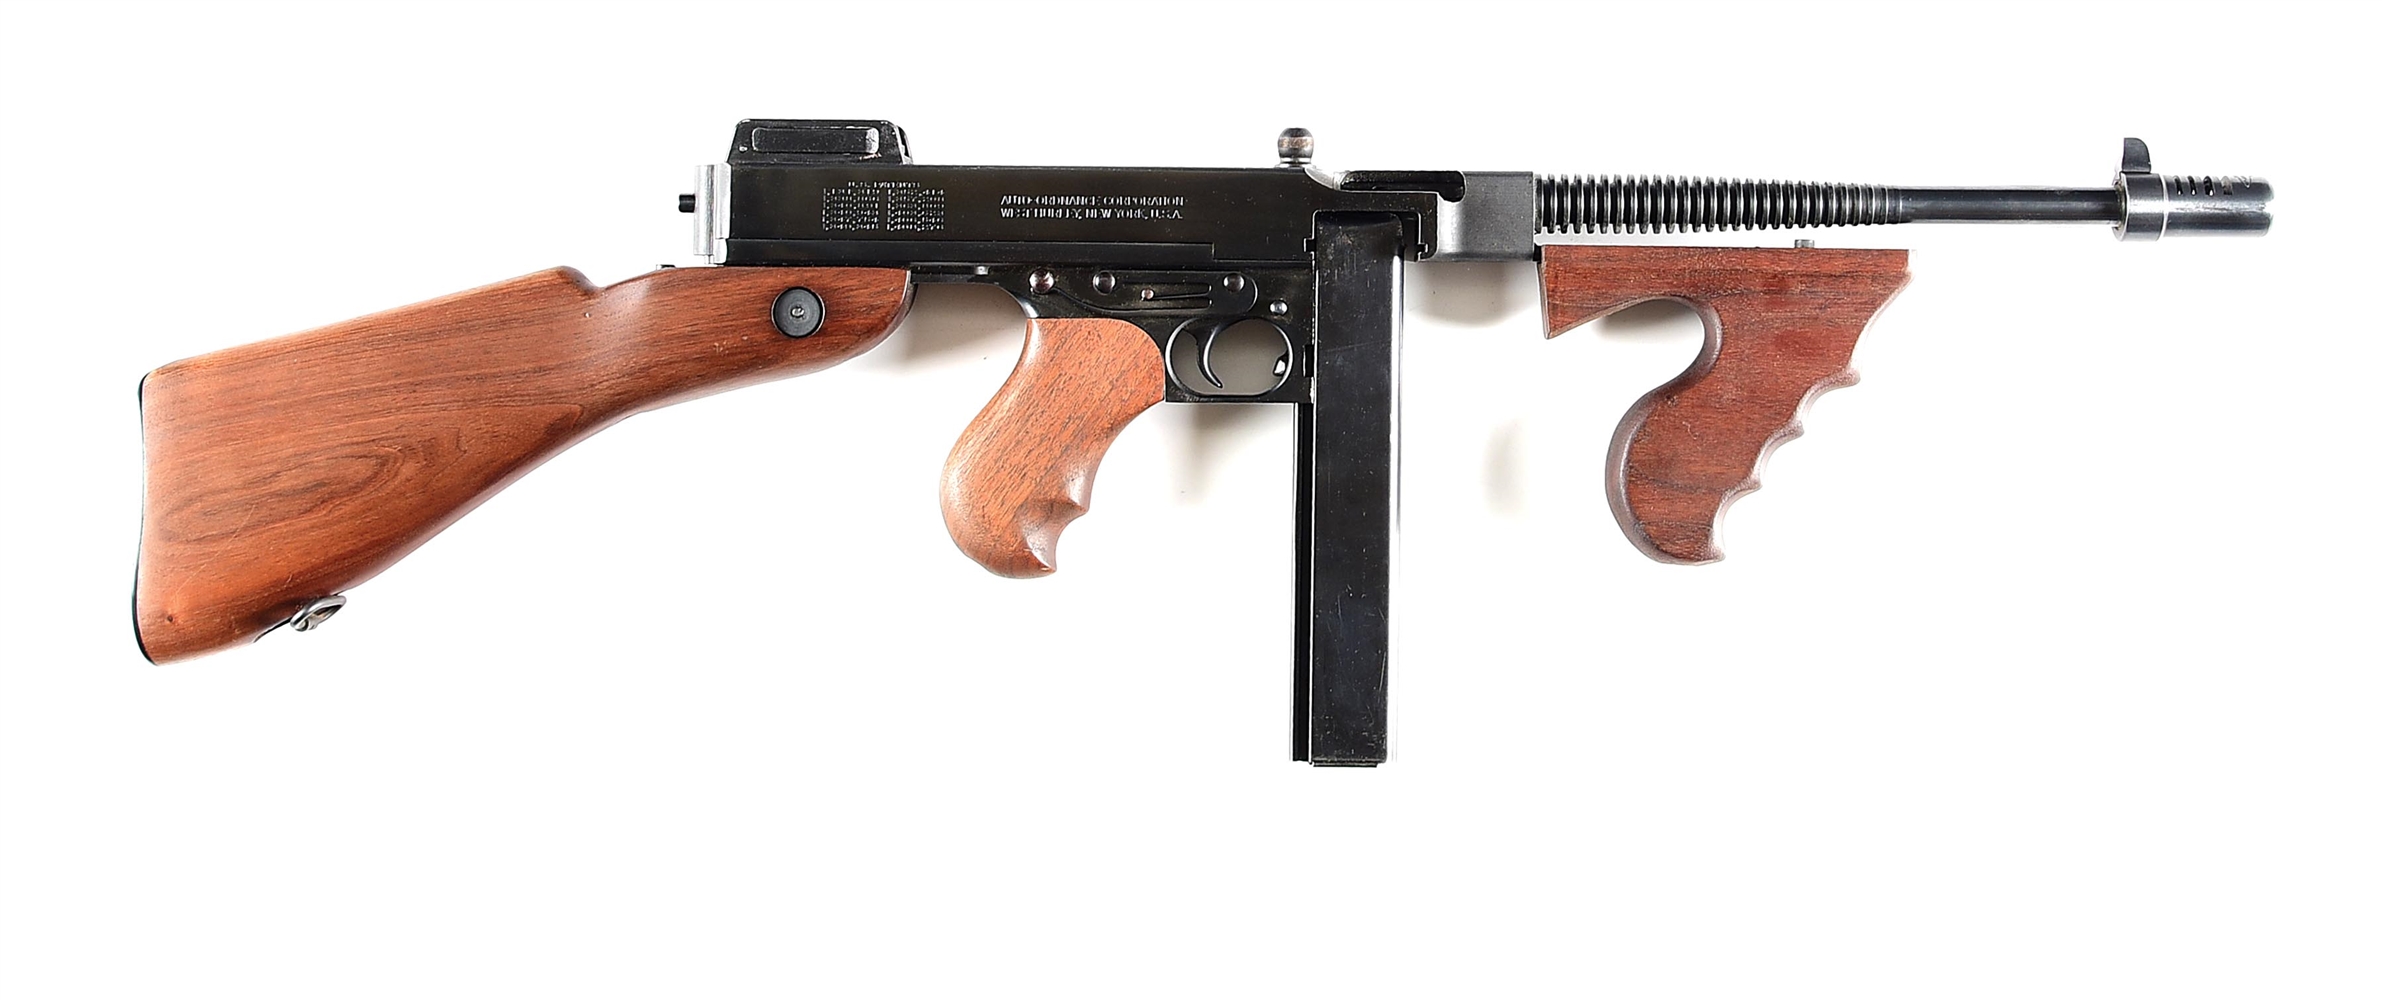 (N) NEAR MINT AUTO ORDNANCE WEST HURLEY THOMPSON MODEL 1928 MACHINE GUN (CURIO & RELIC).